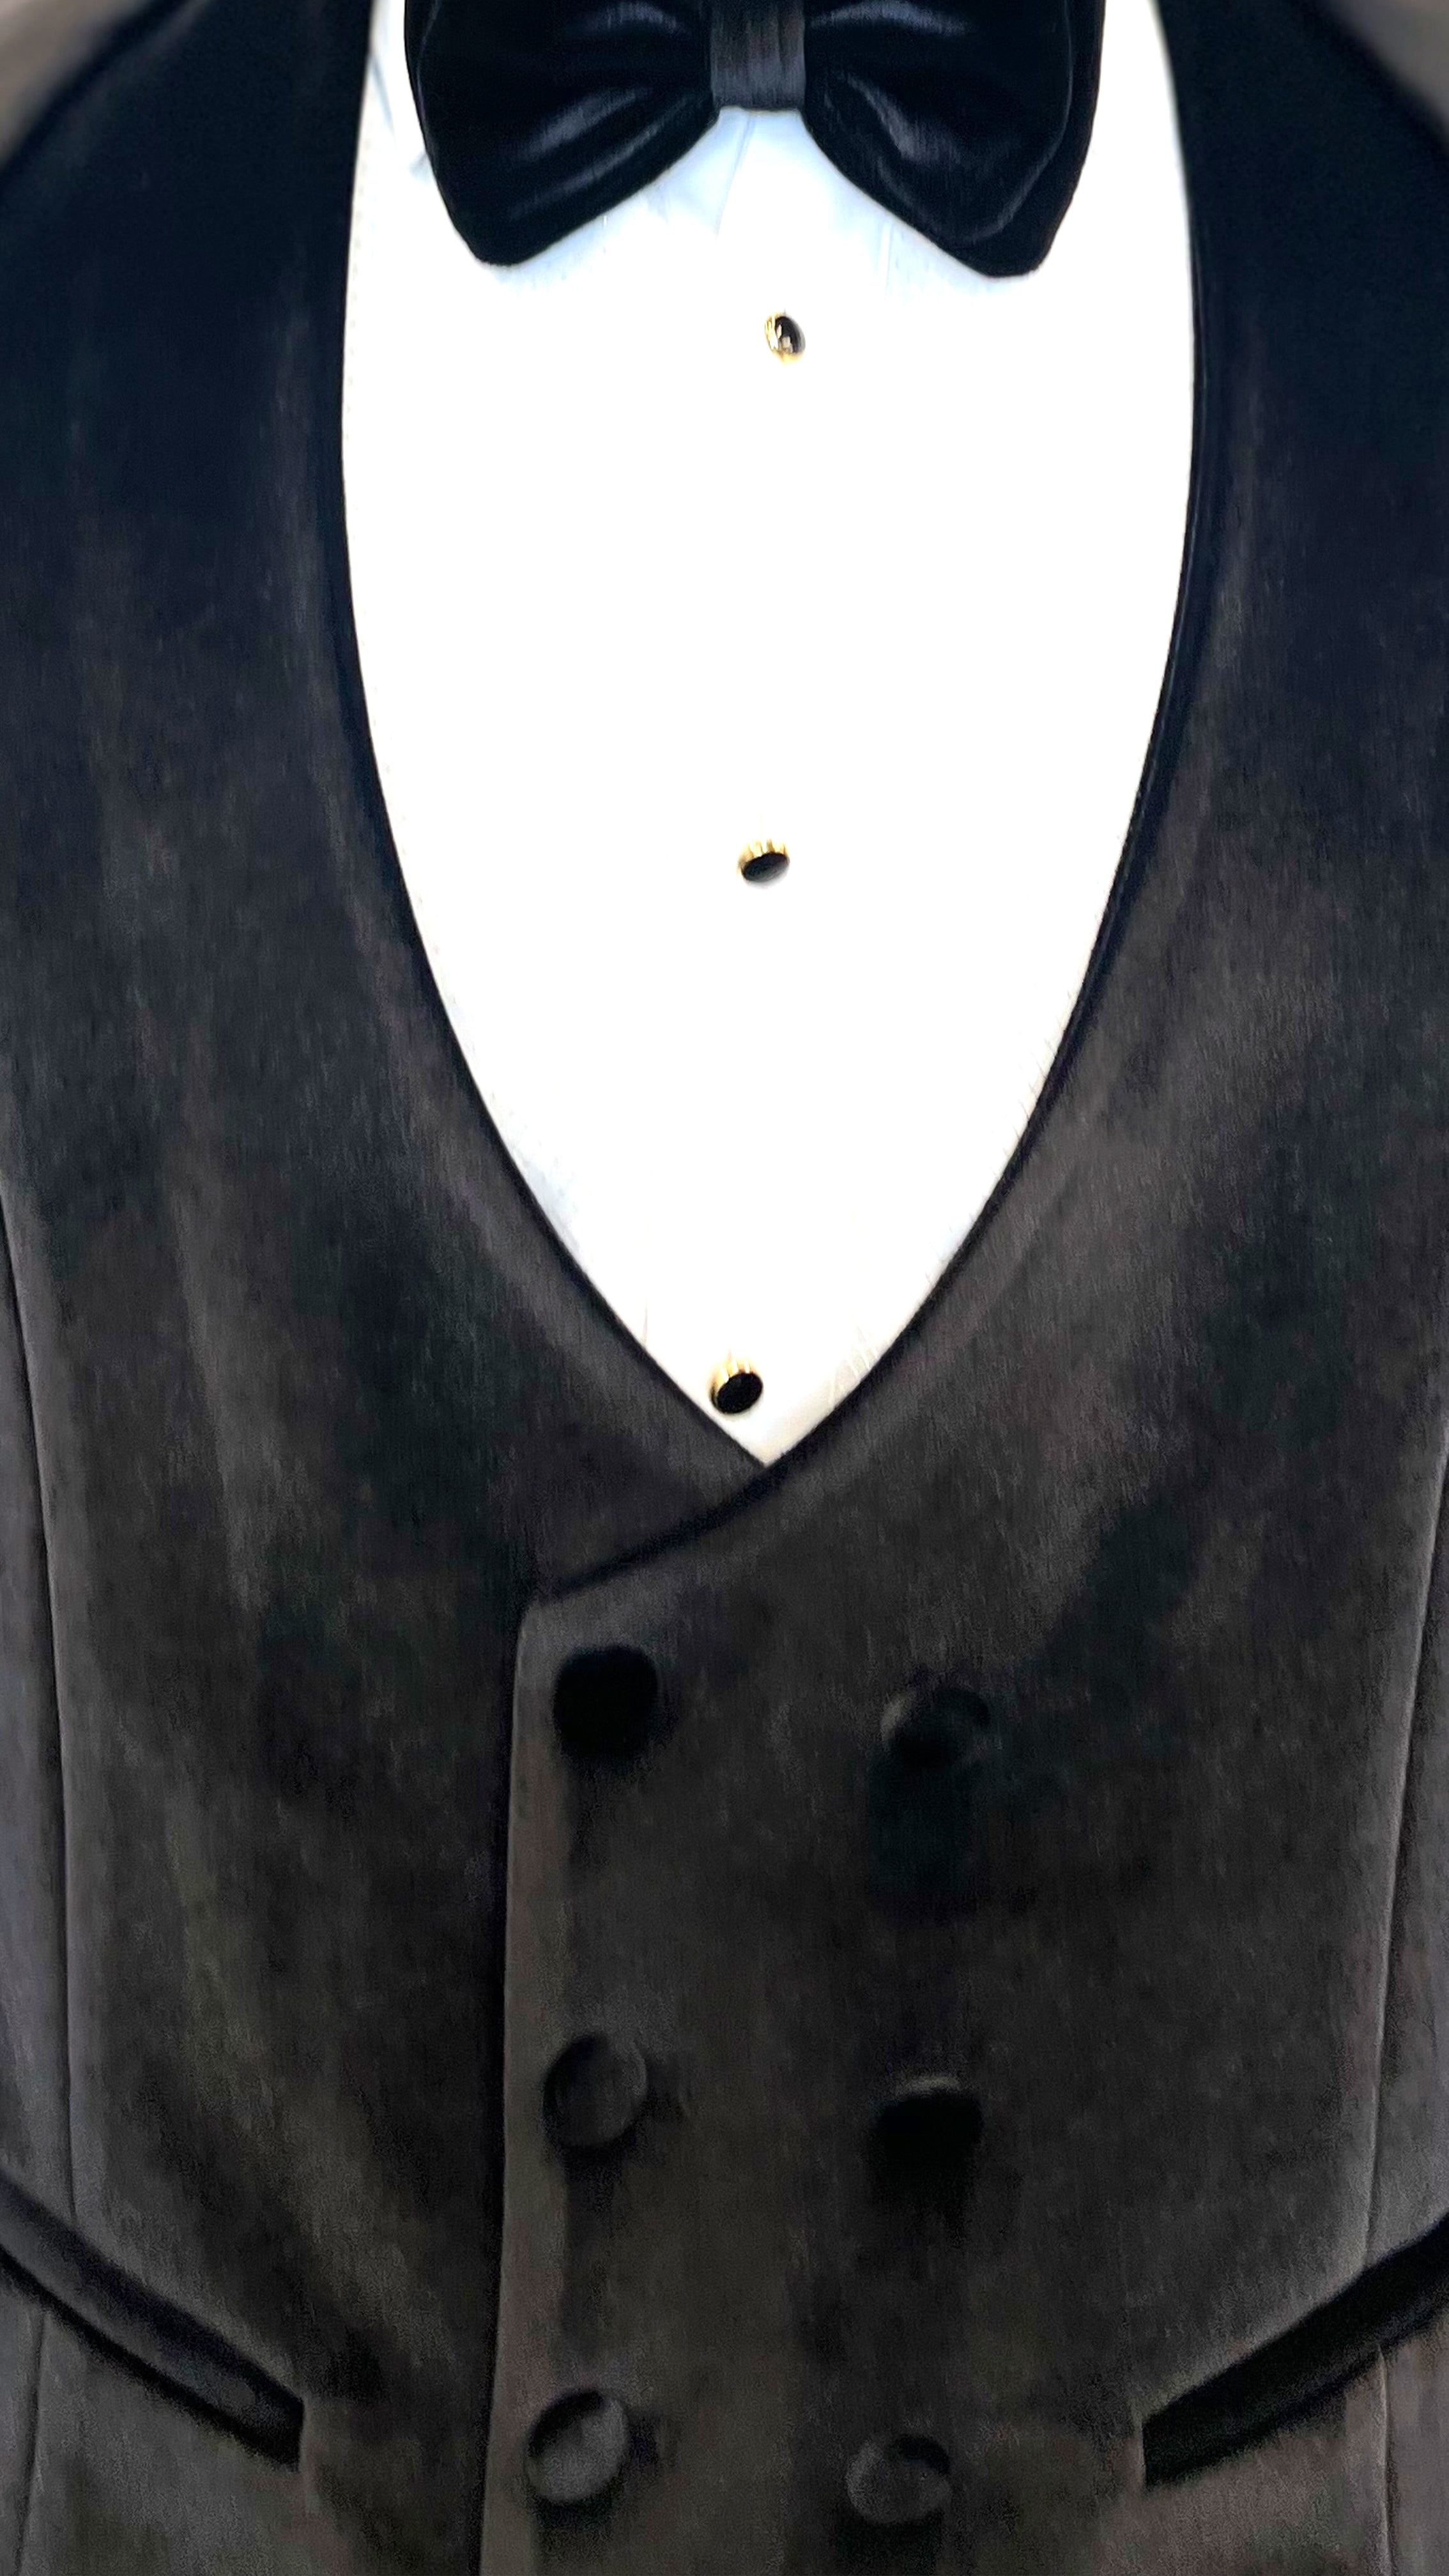 Luxe Sequin Vercini Tuxedo®